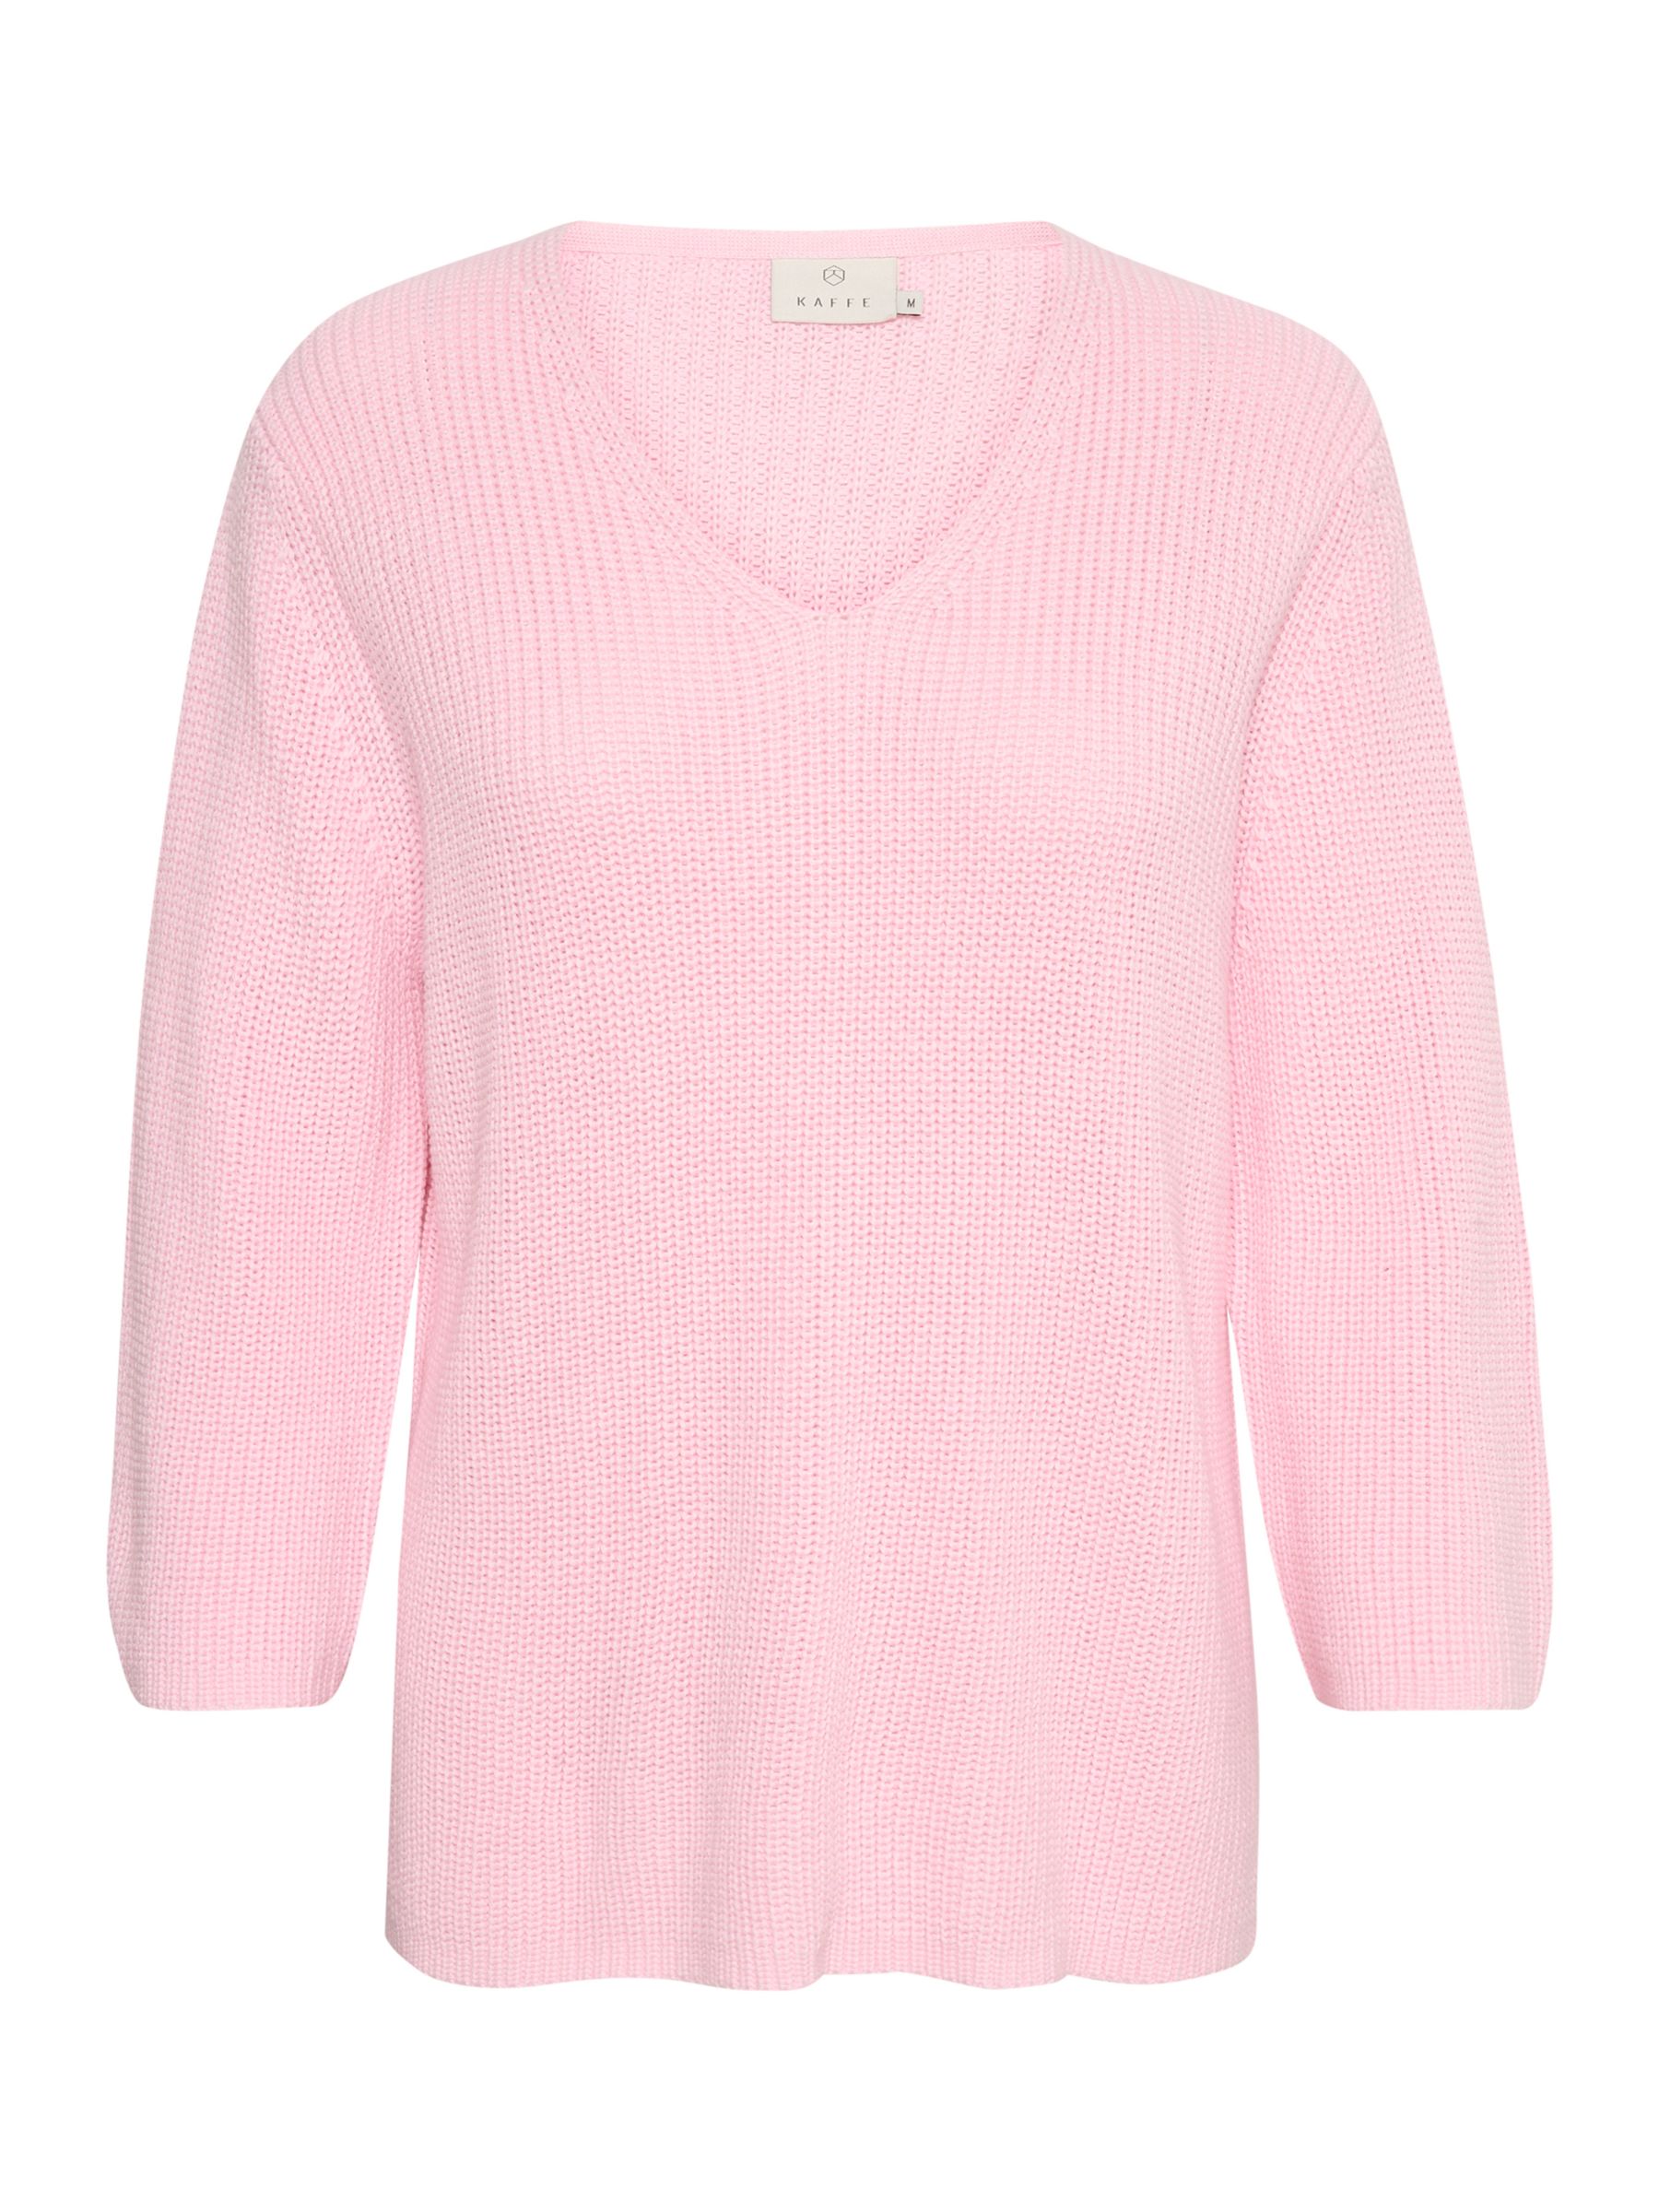 Buy KAFFE Merian V-Neck Cropped Sleeve Knitted Top Online at johnlewis.com